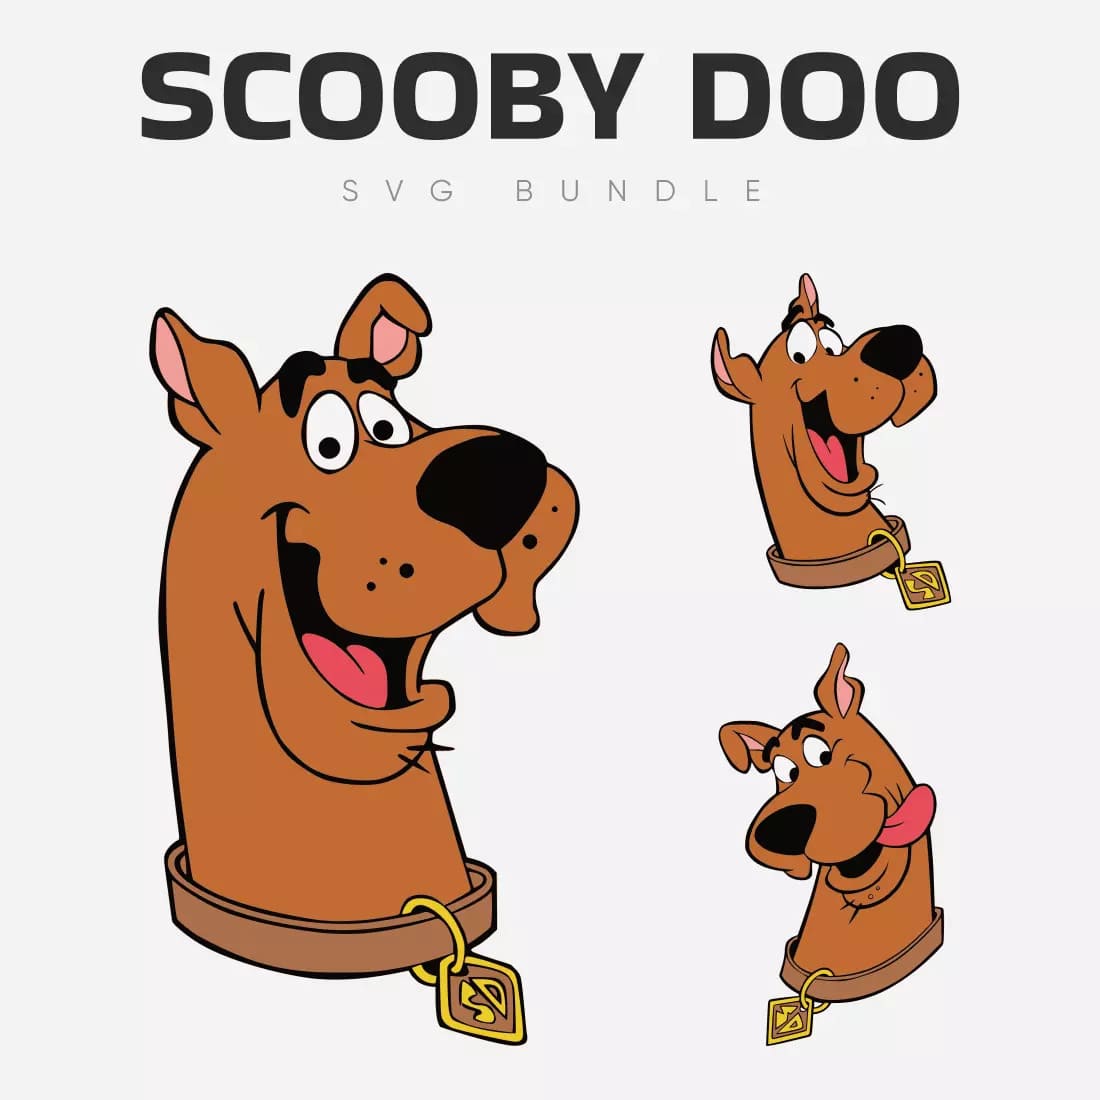 Scooby Doo SVG Bundle Preview.